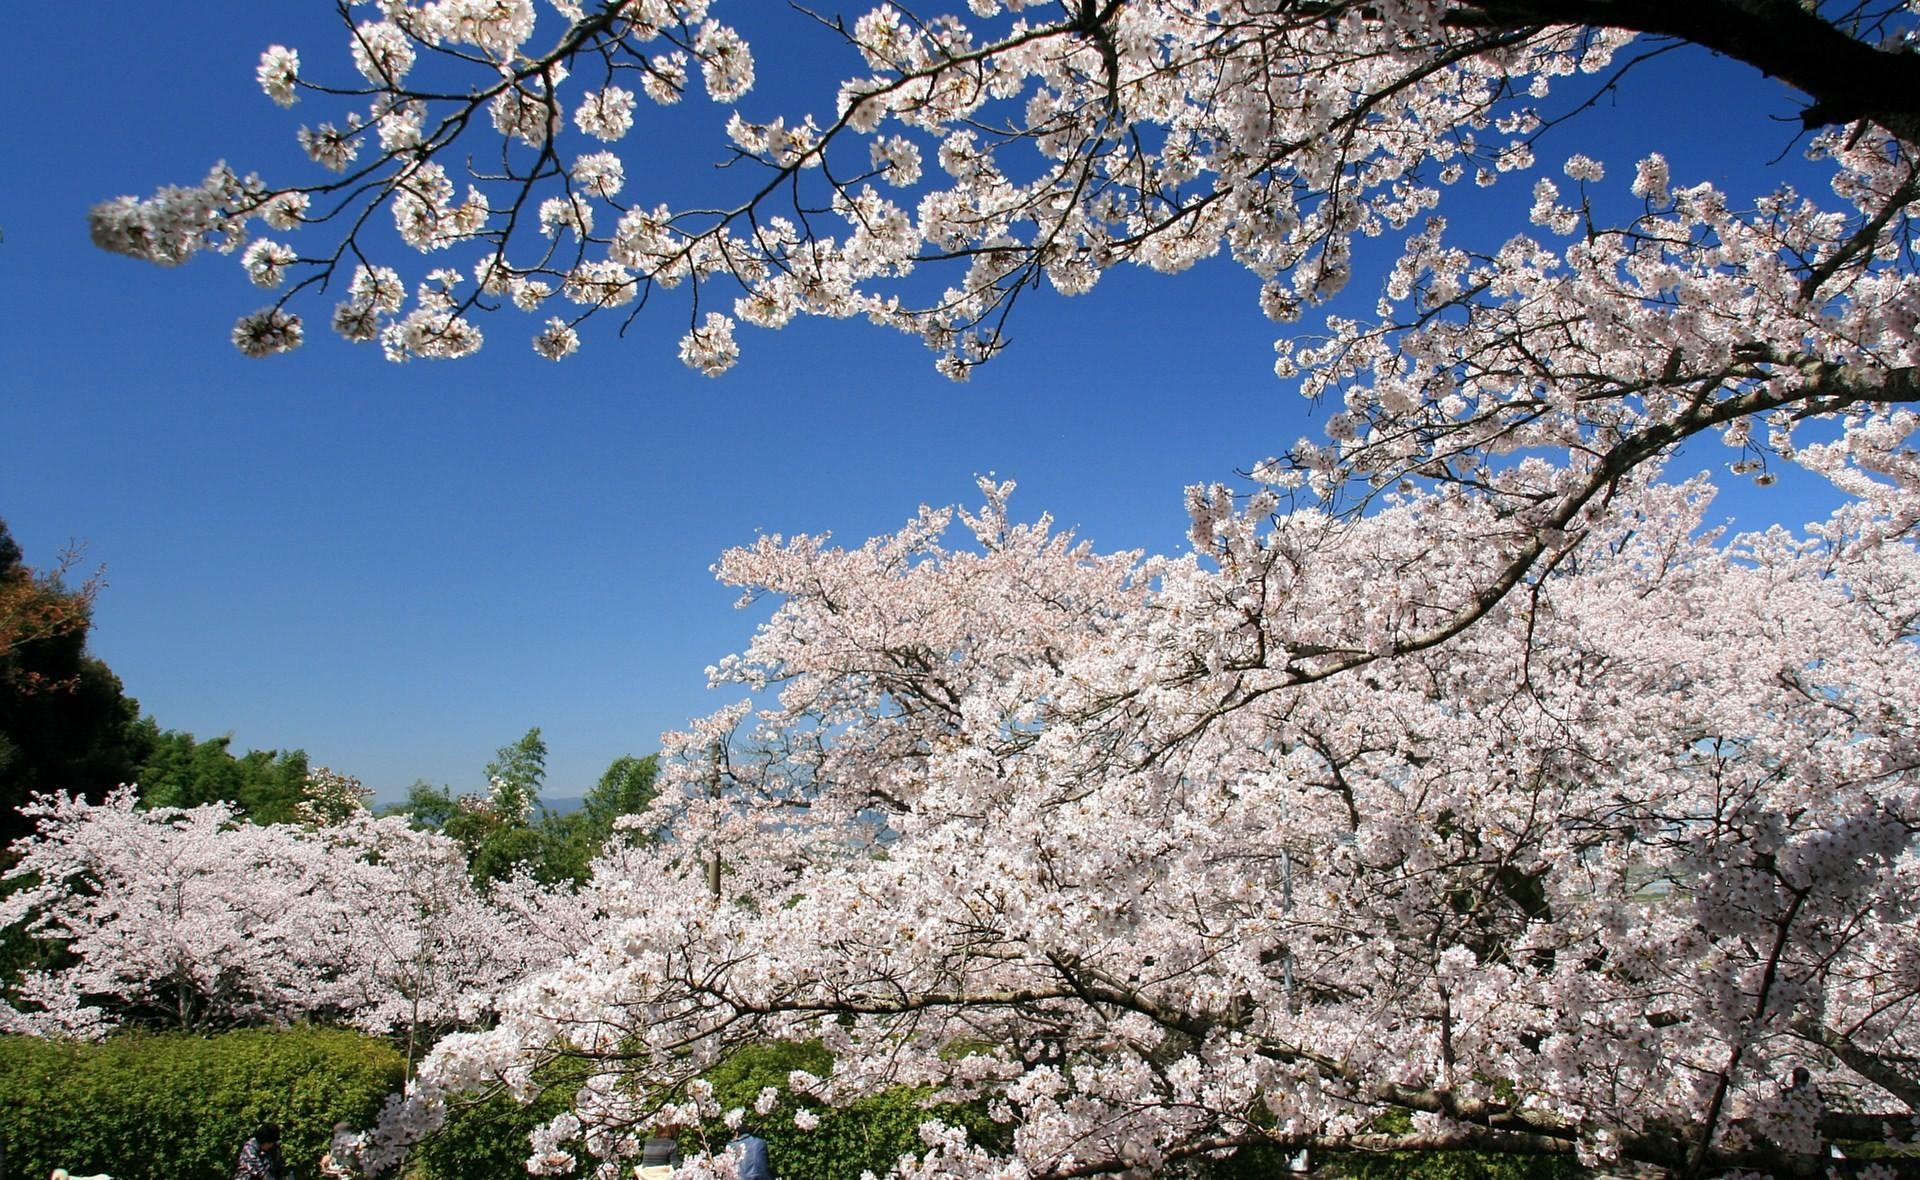 121703 Заставки и Обои Сакура на телефон. Скачать весна, небо, цветение, цветы картинки бесплатно